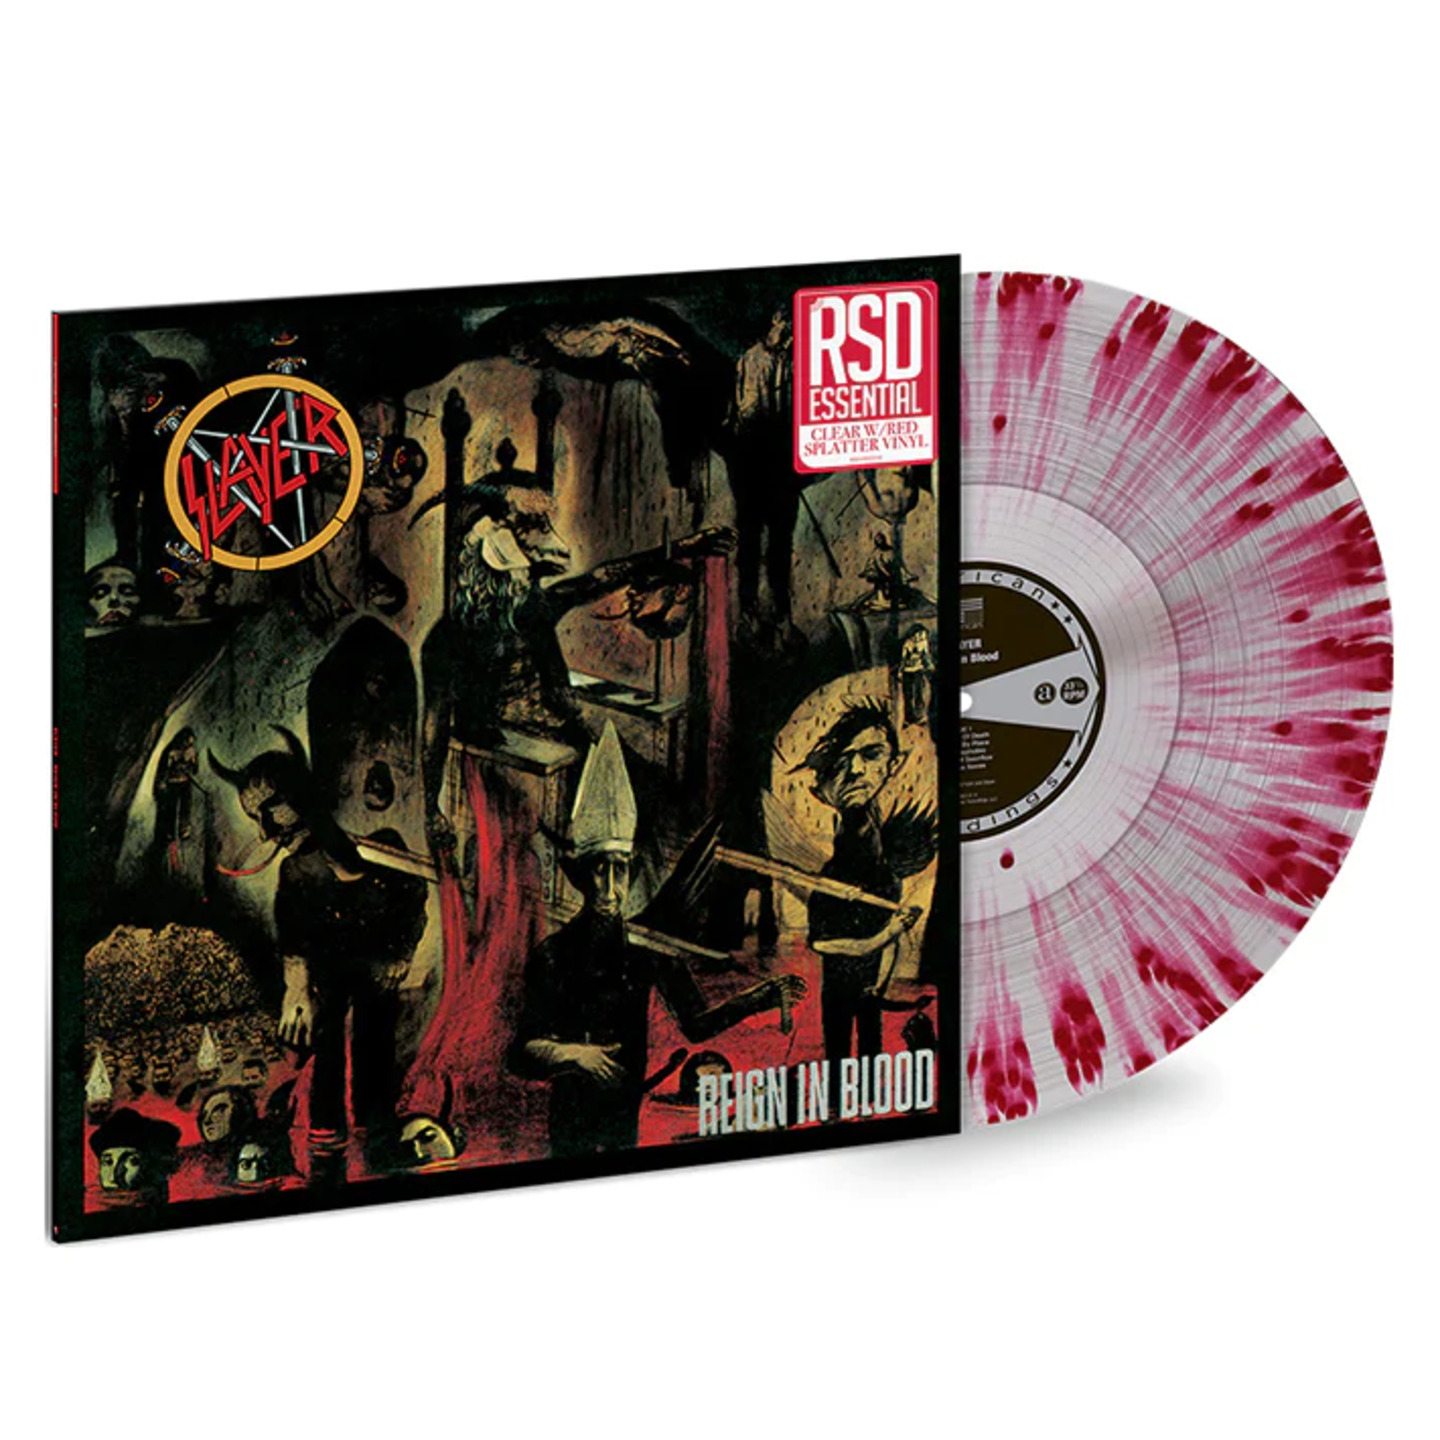 SLAYER - Reign In Blood LP RSD Essentials, Clear wRed Splatter vinyl